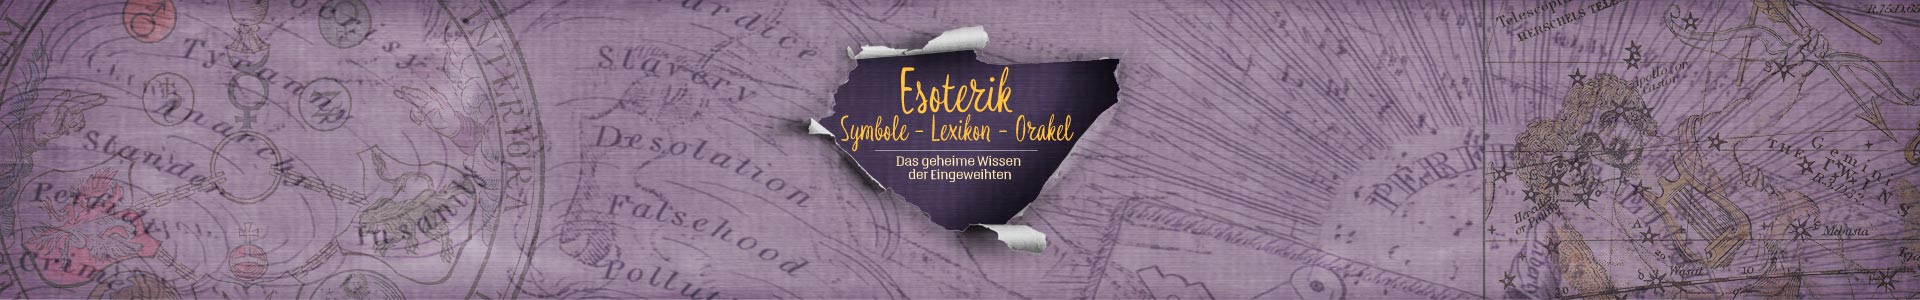 Esoterik - geheimes Wissen - Symbole - Lexikon - Orakel